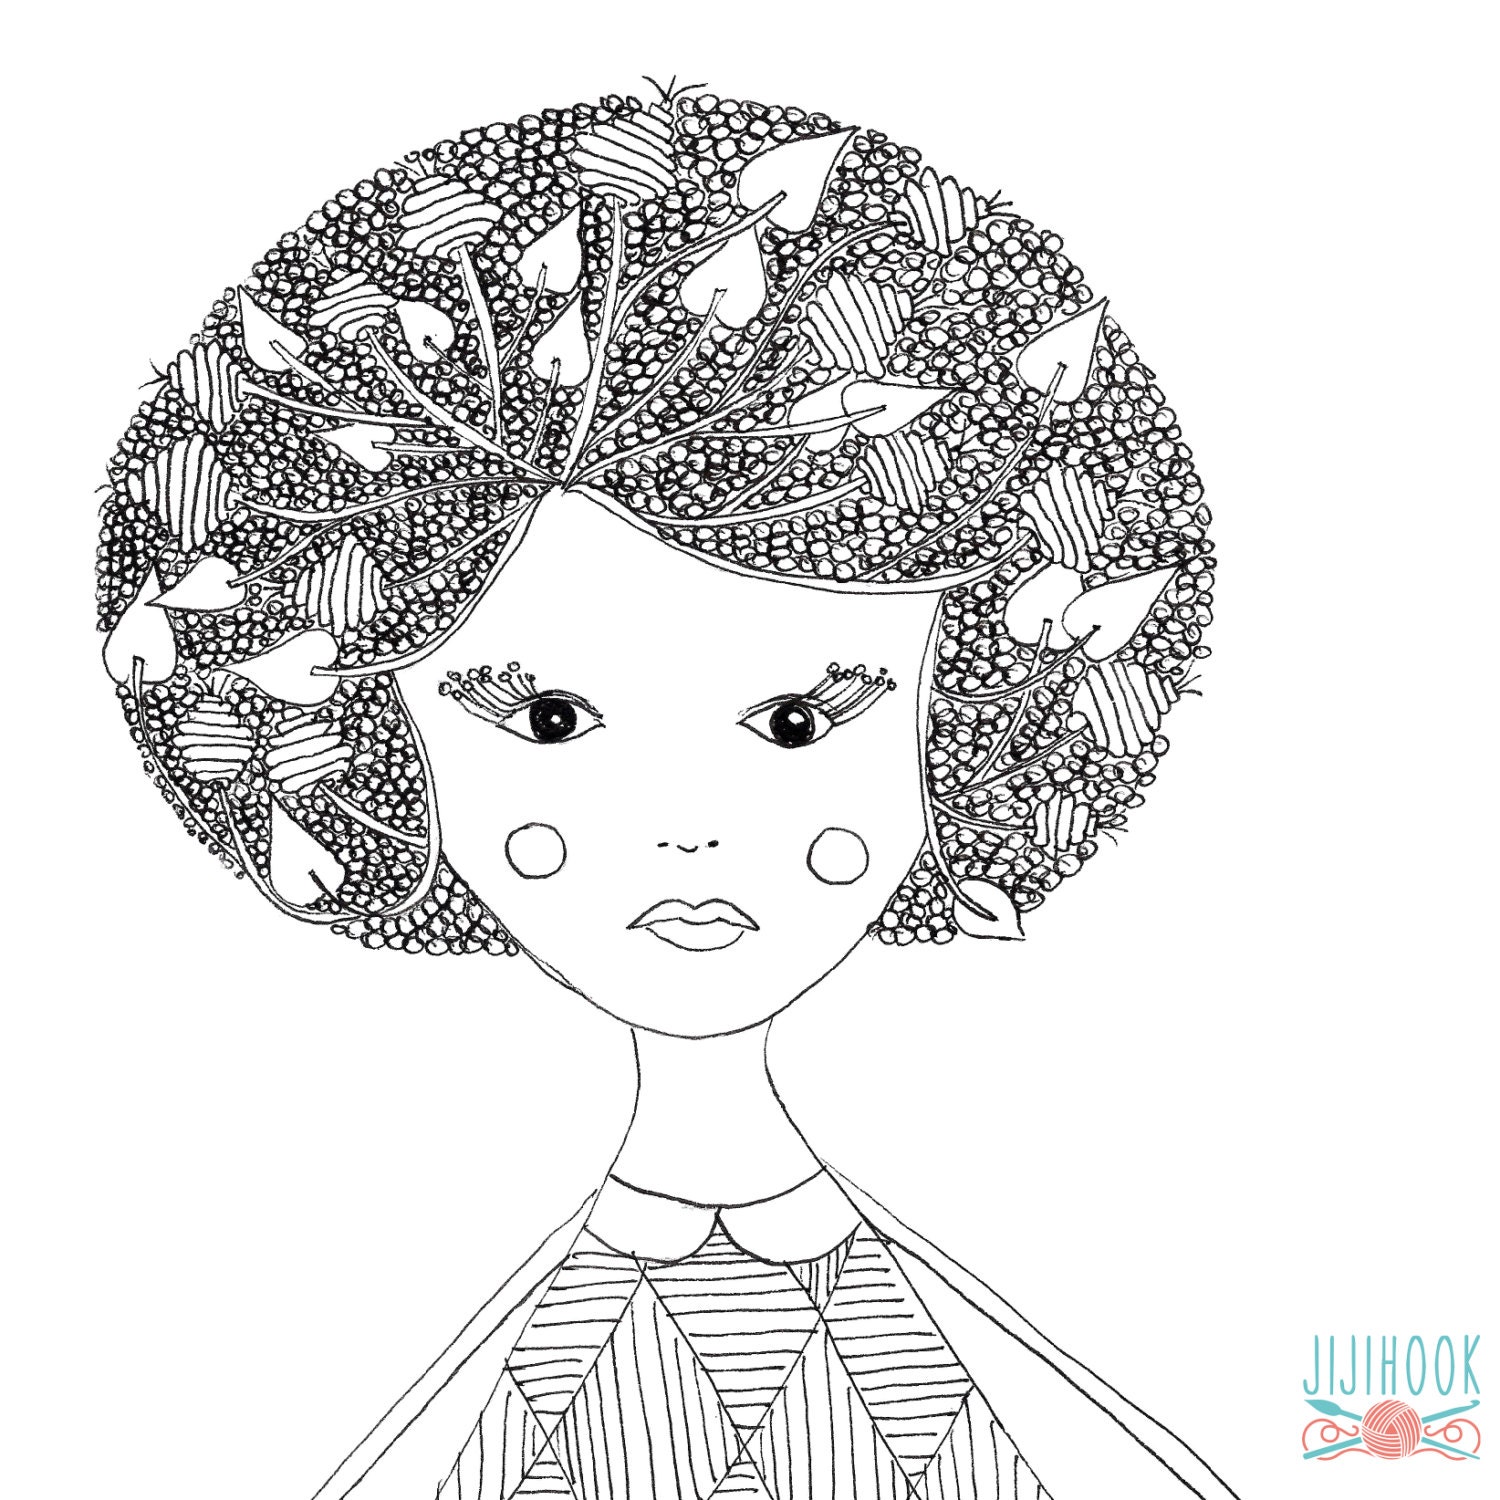 Afro Girl Art Zentangle inspired Art Print PDF Instant by Jijihook